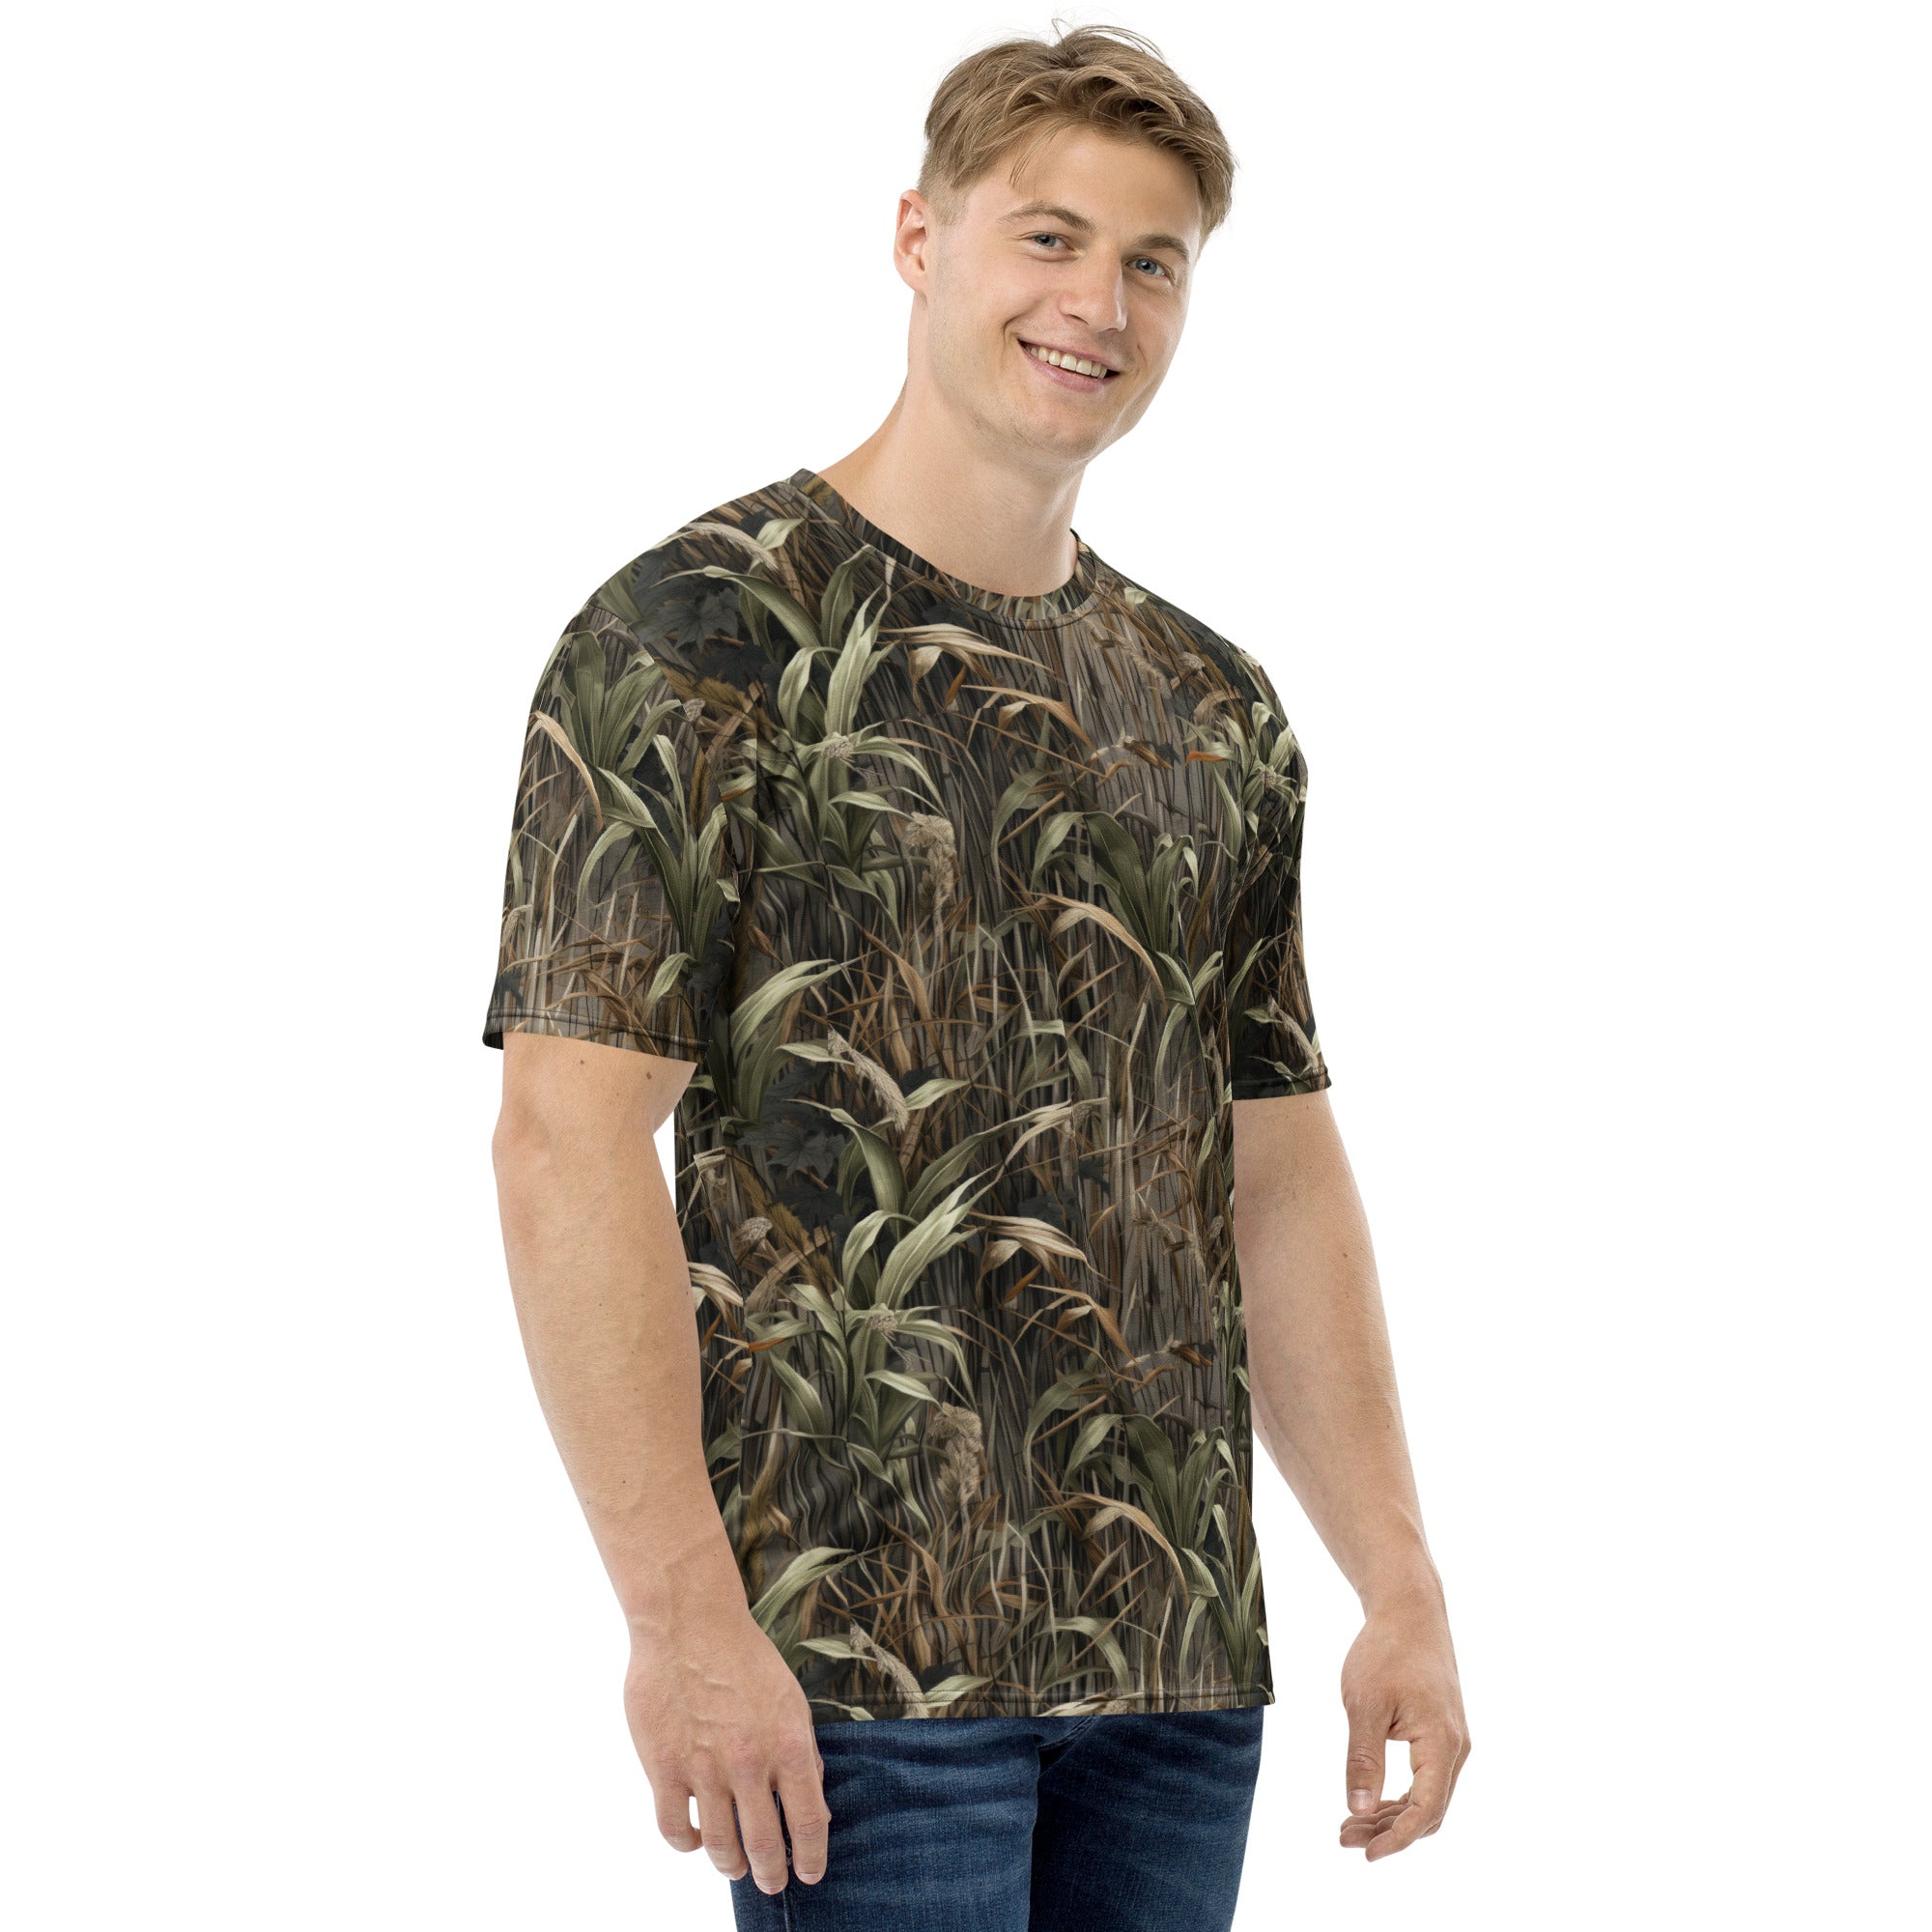 StealthBlend Marsh Camouflage Men's T-Shirt